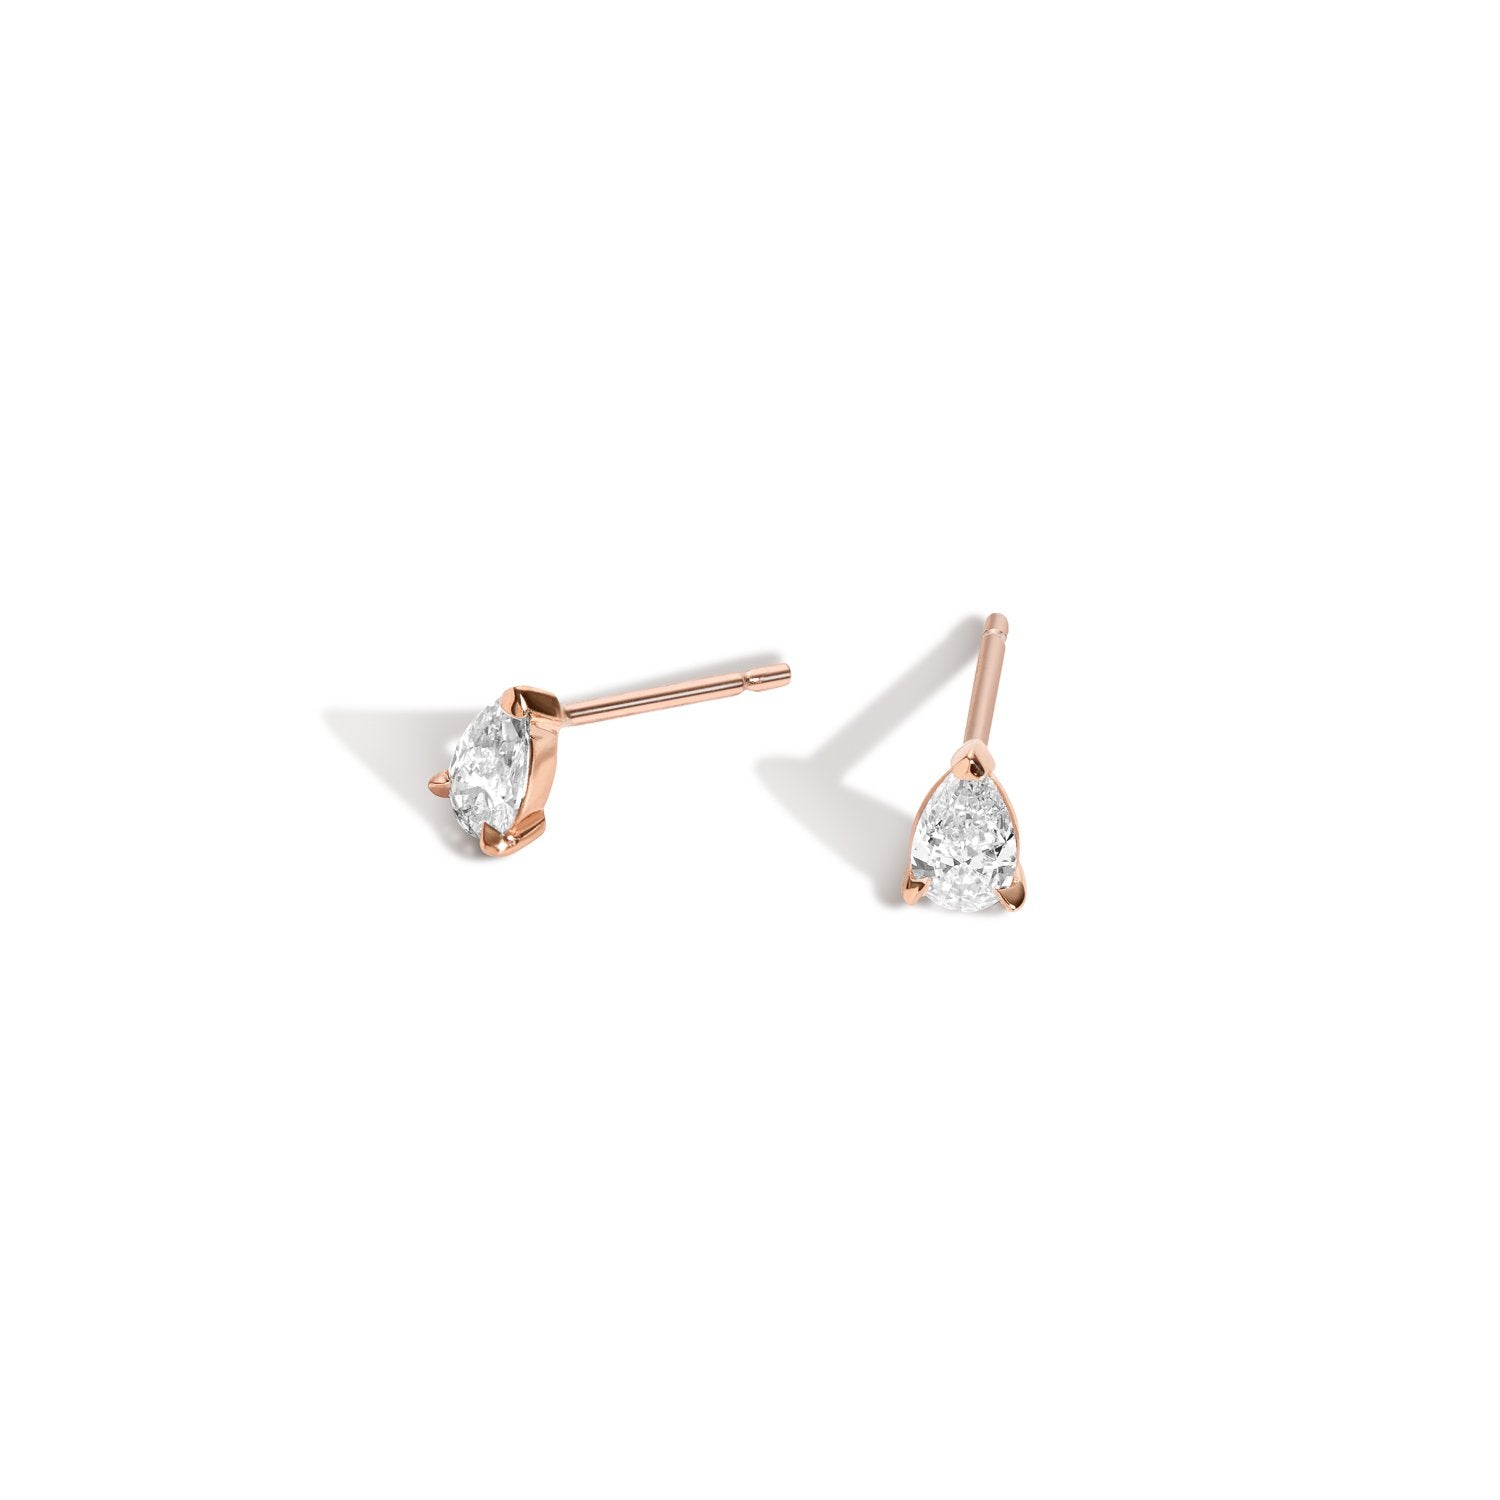 Shahla Karimi Jewelry Love Pear Studs in 14K Rose Gold w/ White Diamond